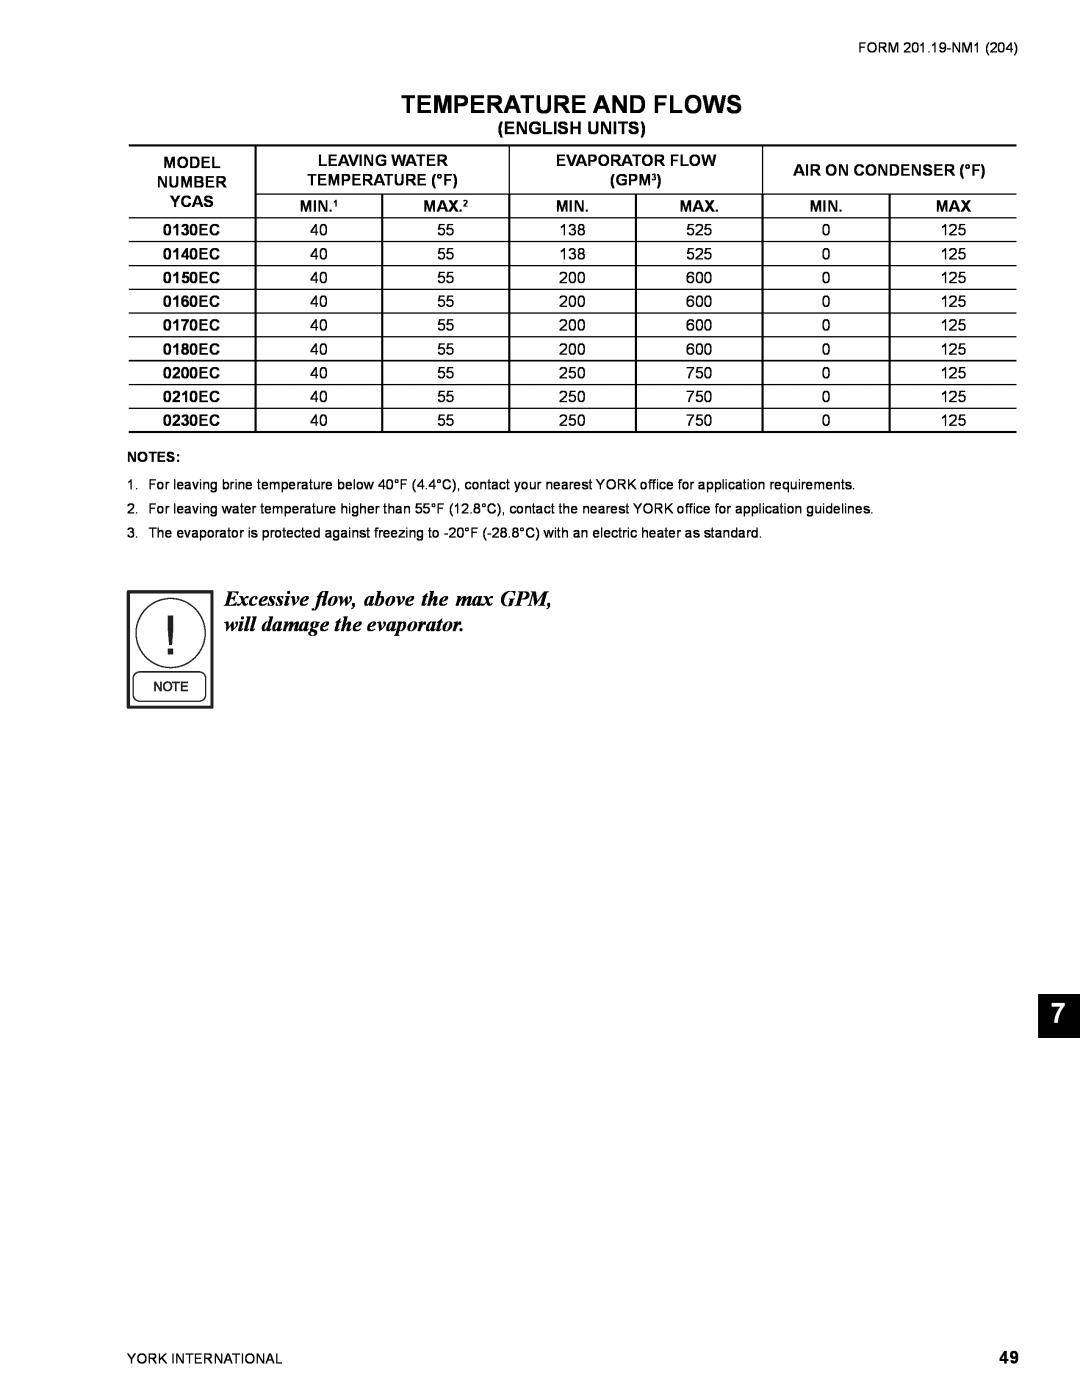 York YCAS0130 manual Temperature And Flows, English Units 